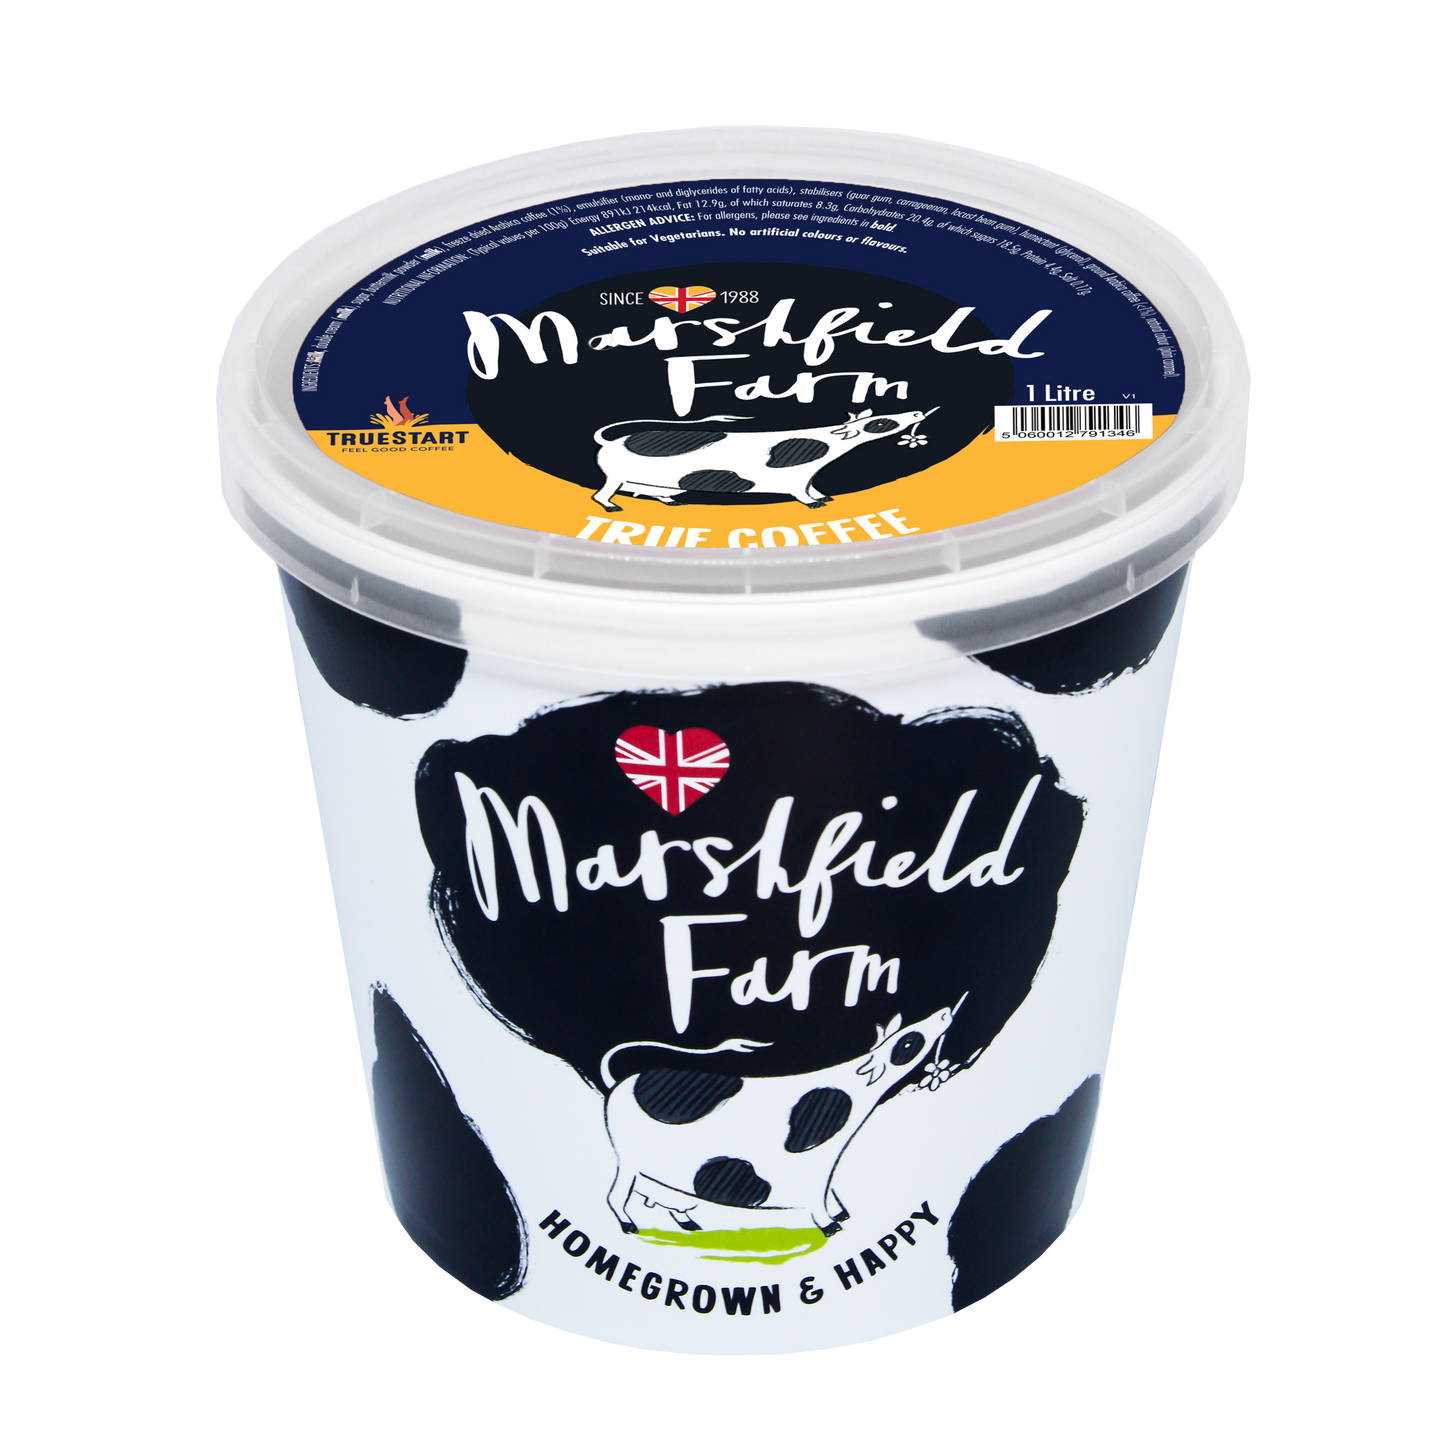 Marshfield Farm True Coffee Ice Cream One Litre Tub